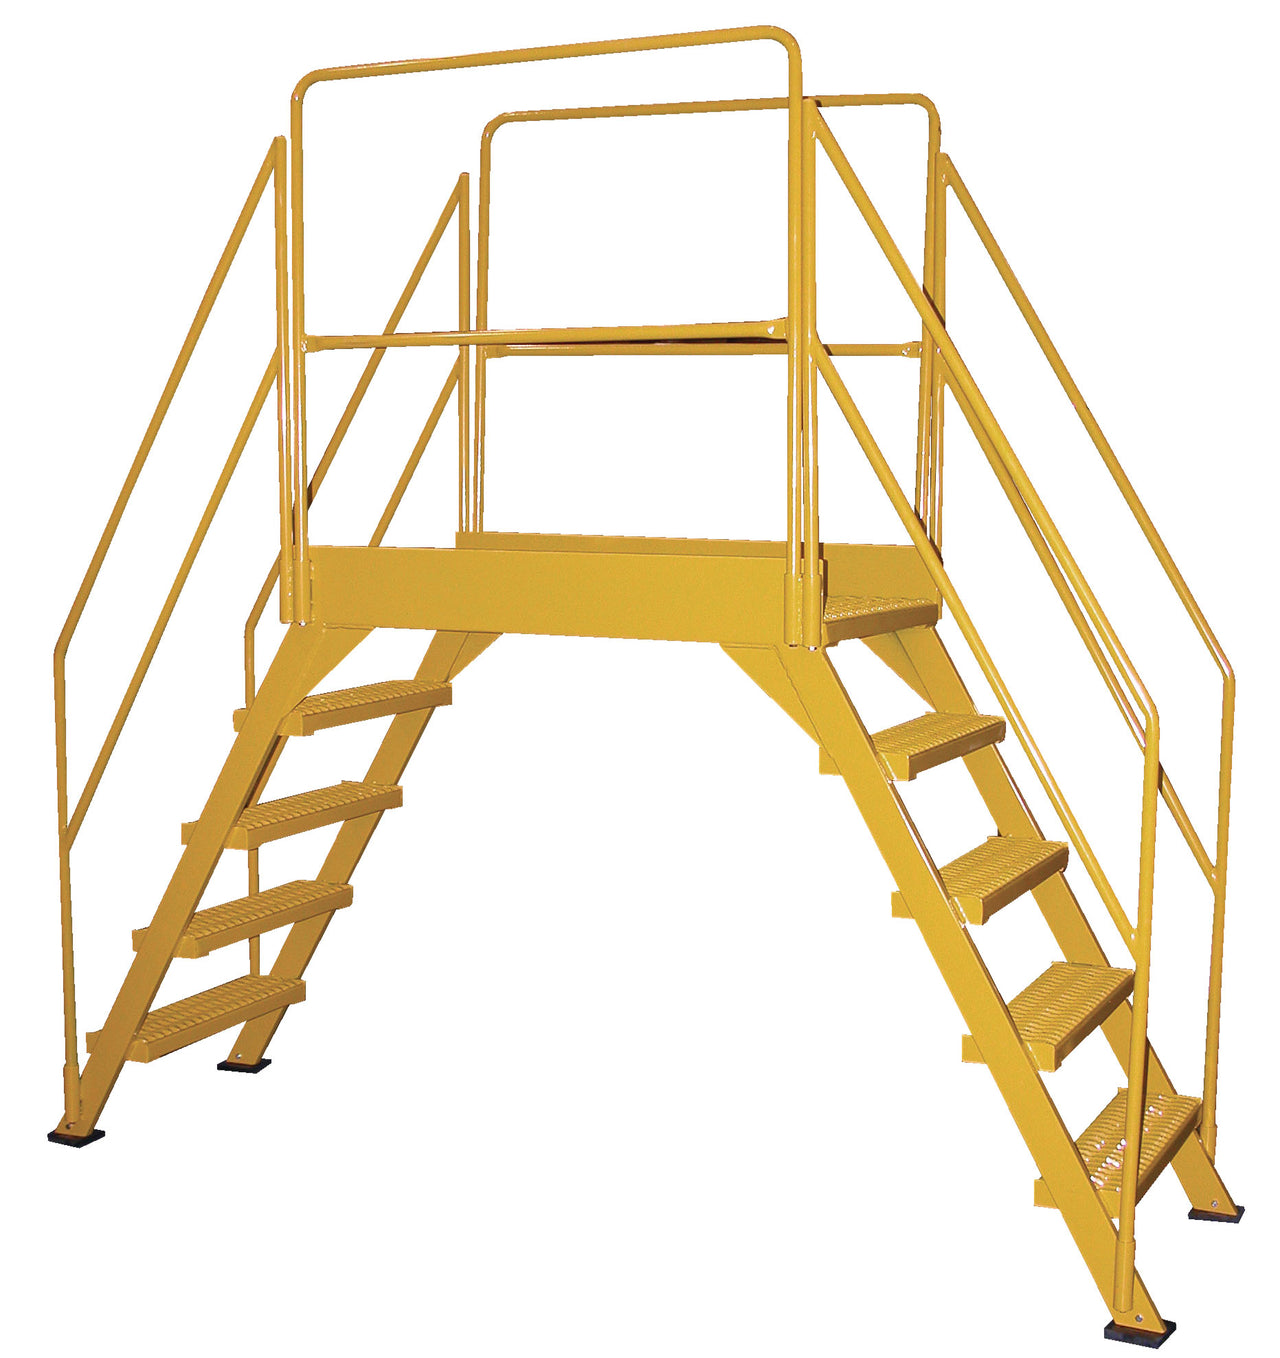 4 Step Cross-Over Ladder w/ 48" Deck